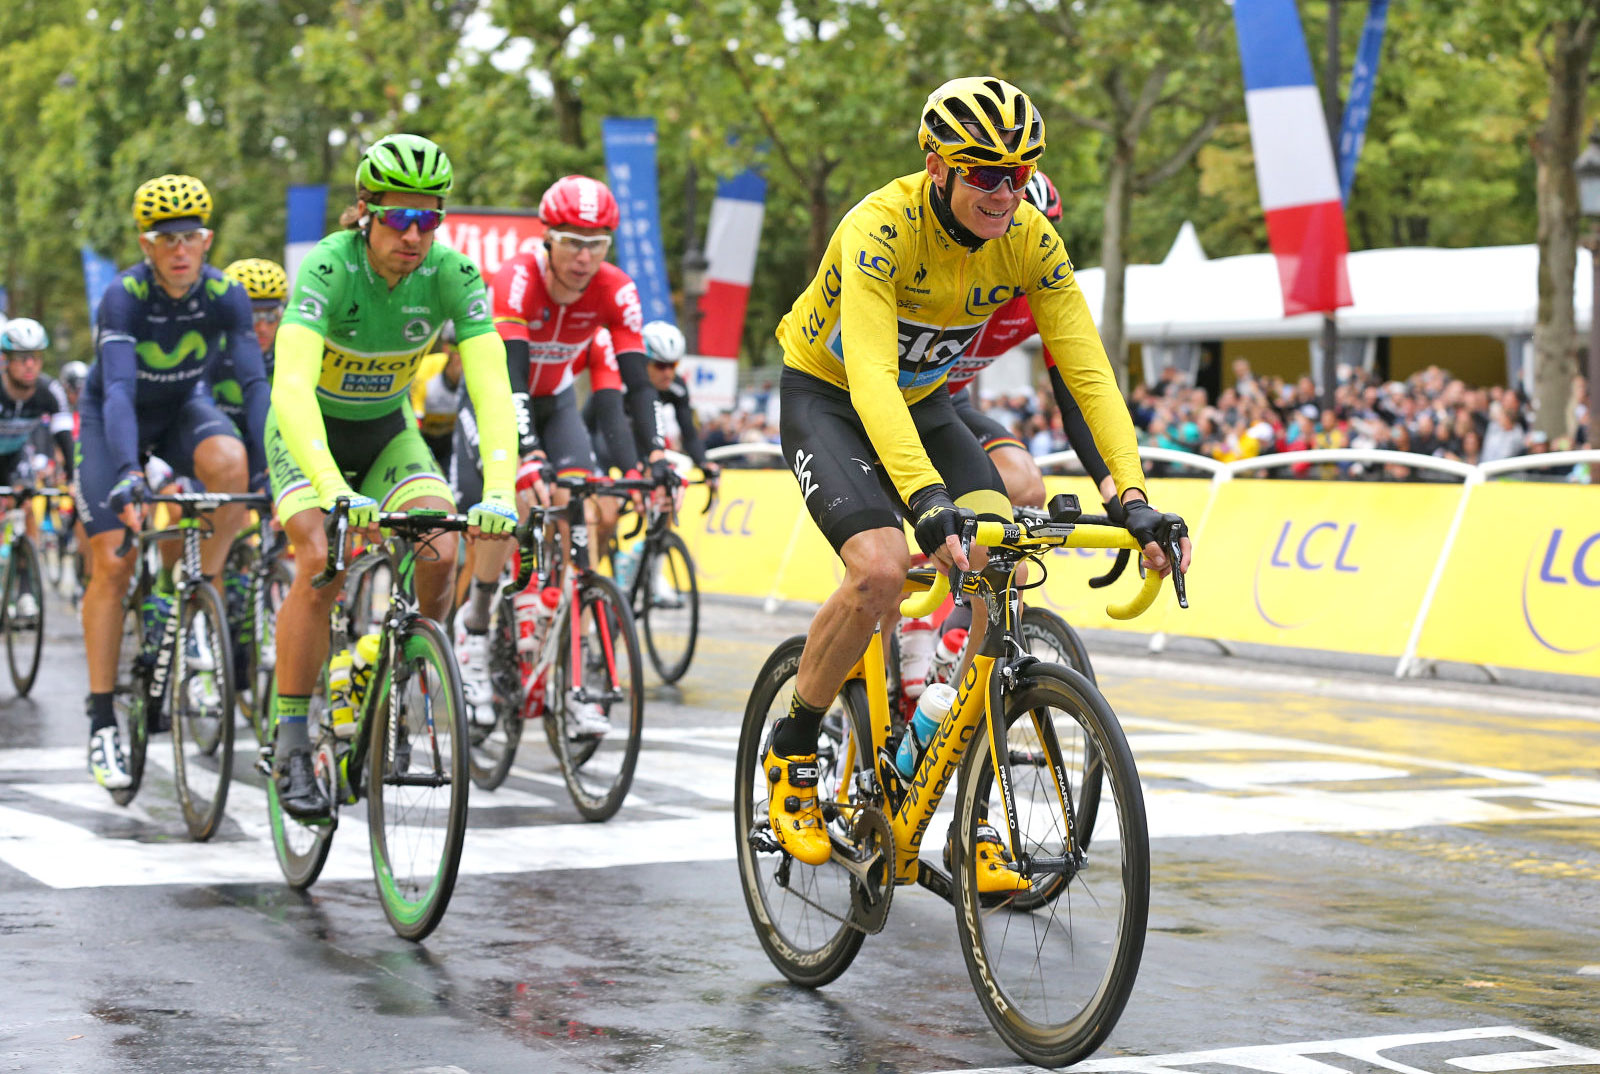 Tour de France will use thermal cameras to spot hidden motors